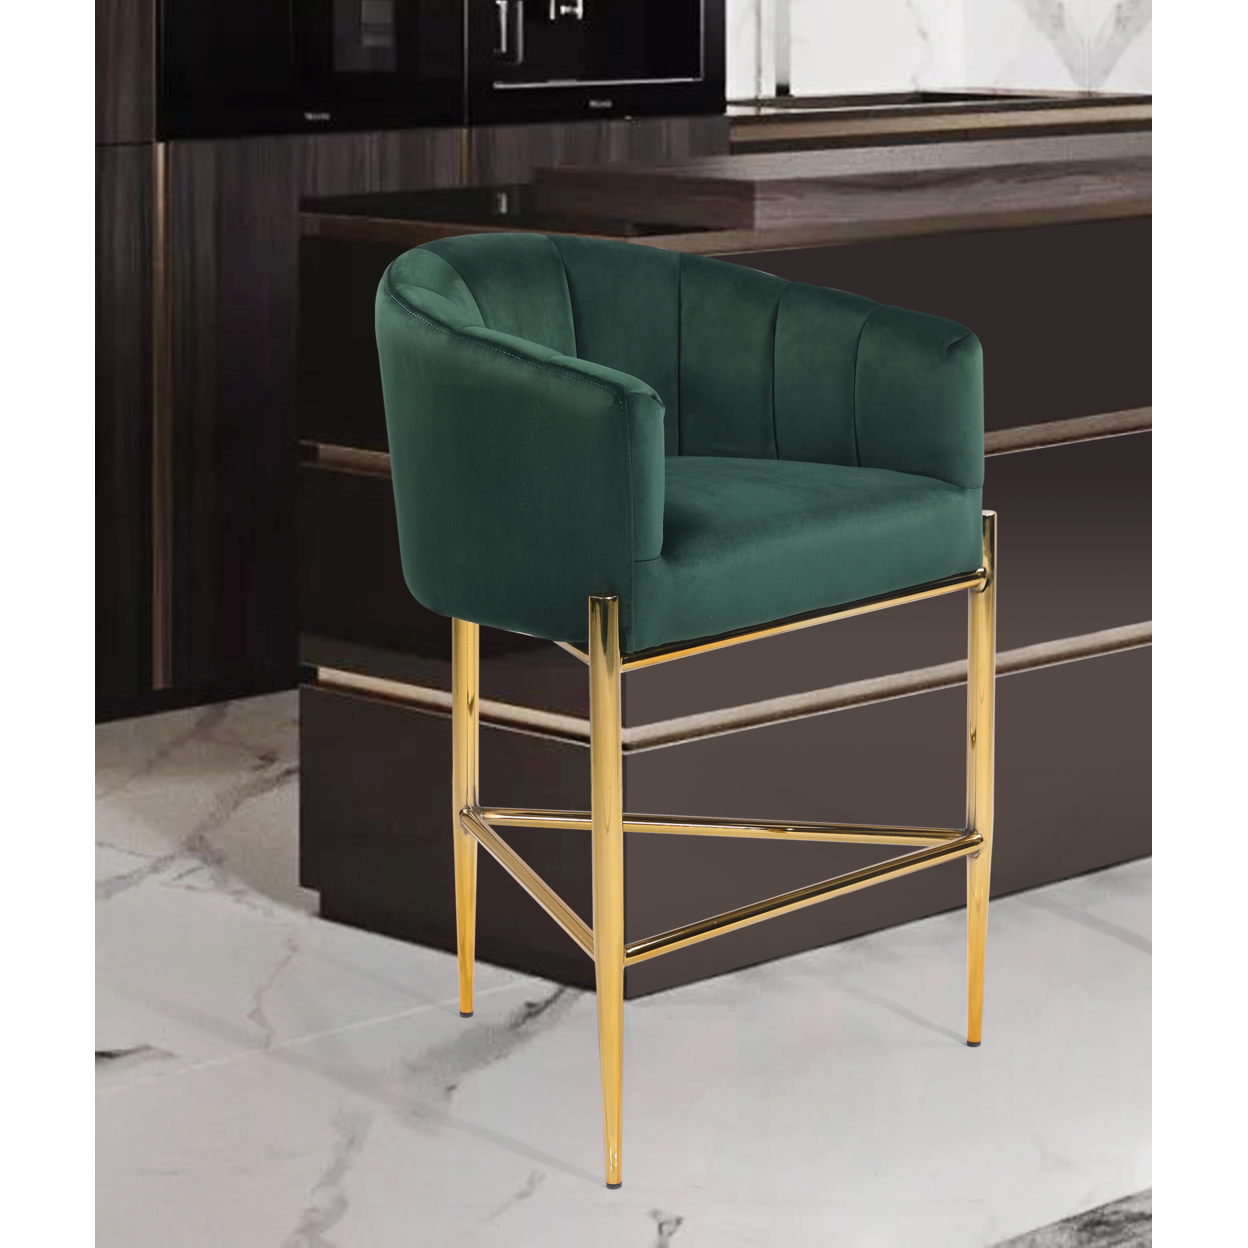 Iconic Home Ardee Counter Stool Chair Velvet Upholstered Shelter Arm Shell Design 3 Legged Gold Tone Solid Metal Base - Green